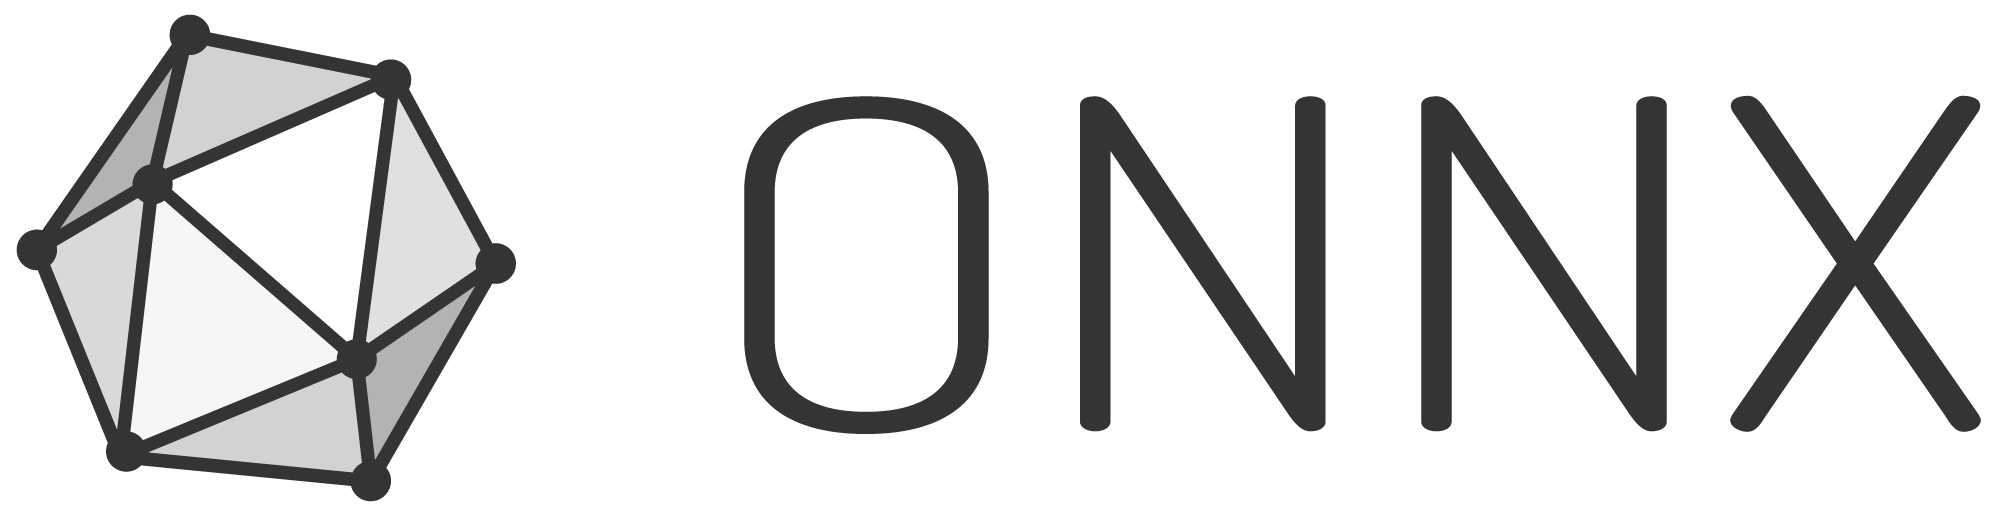 ONNX_logo